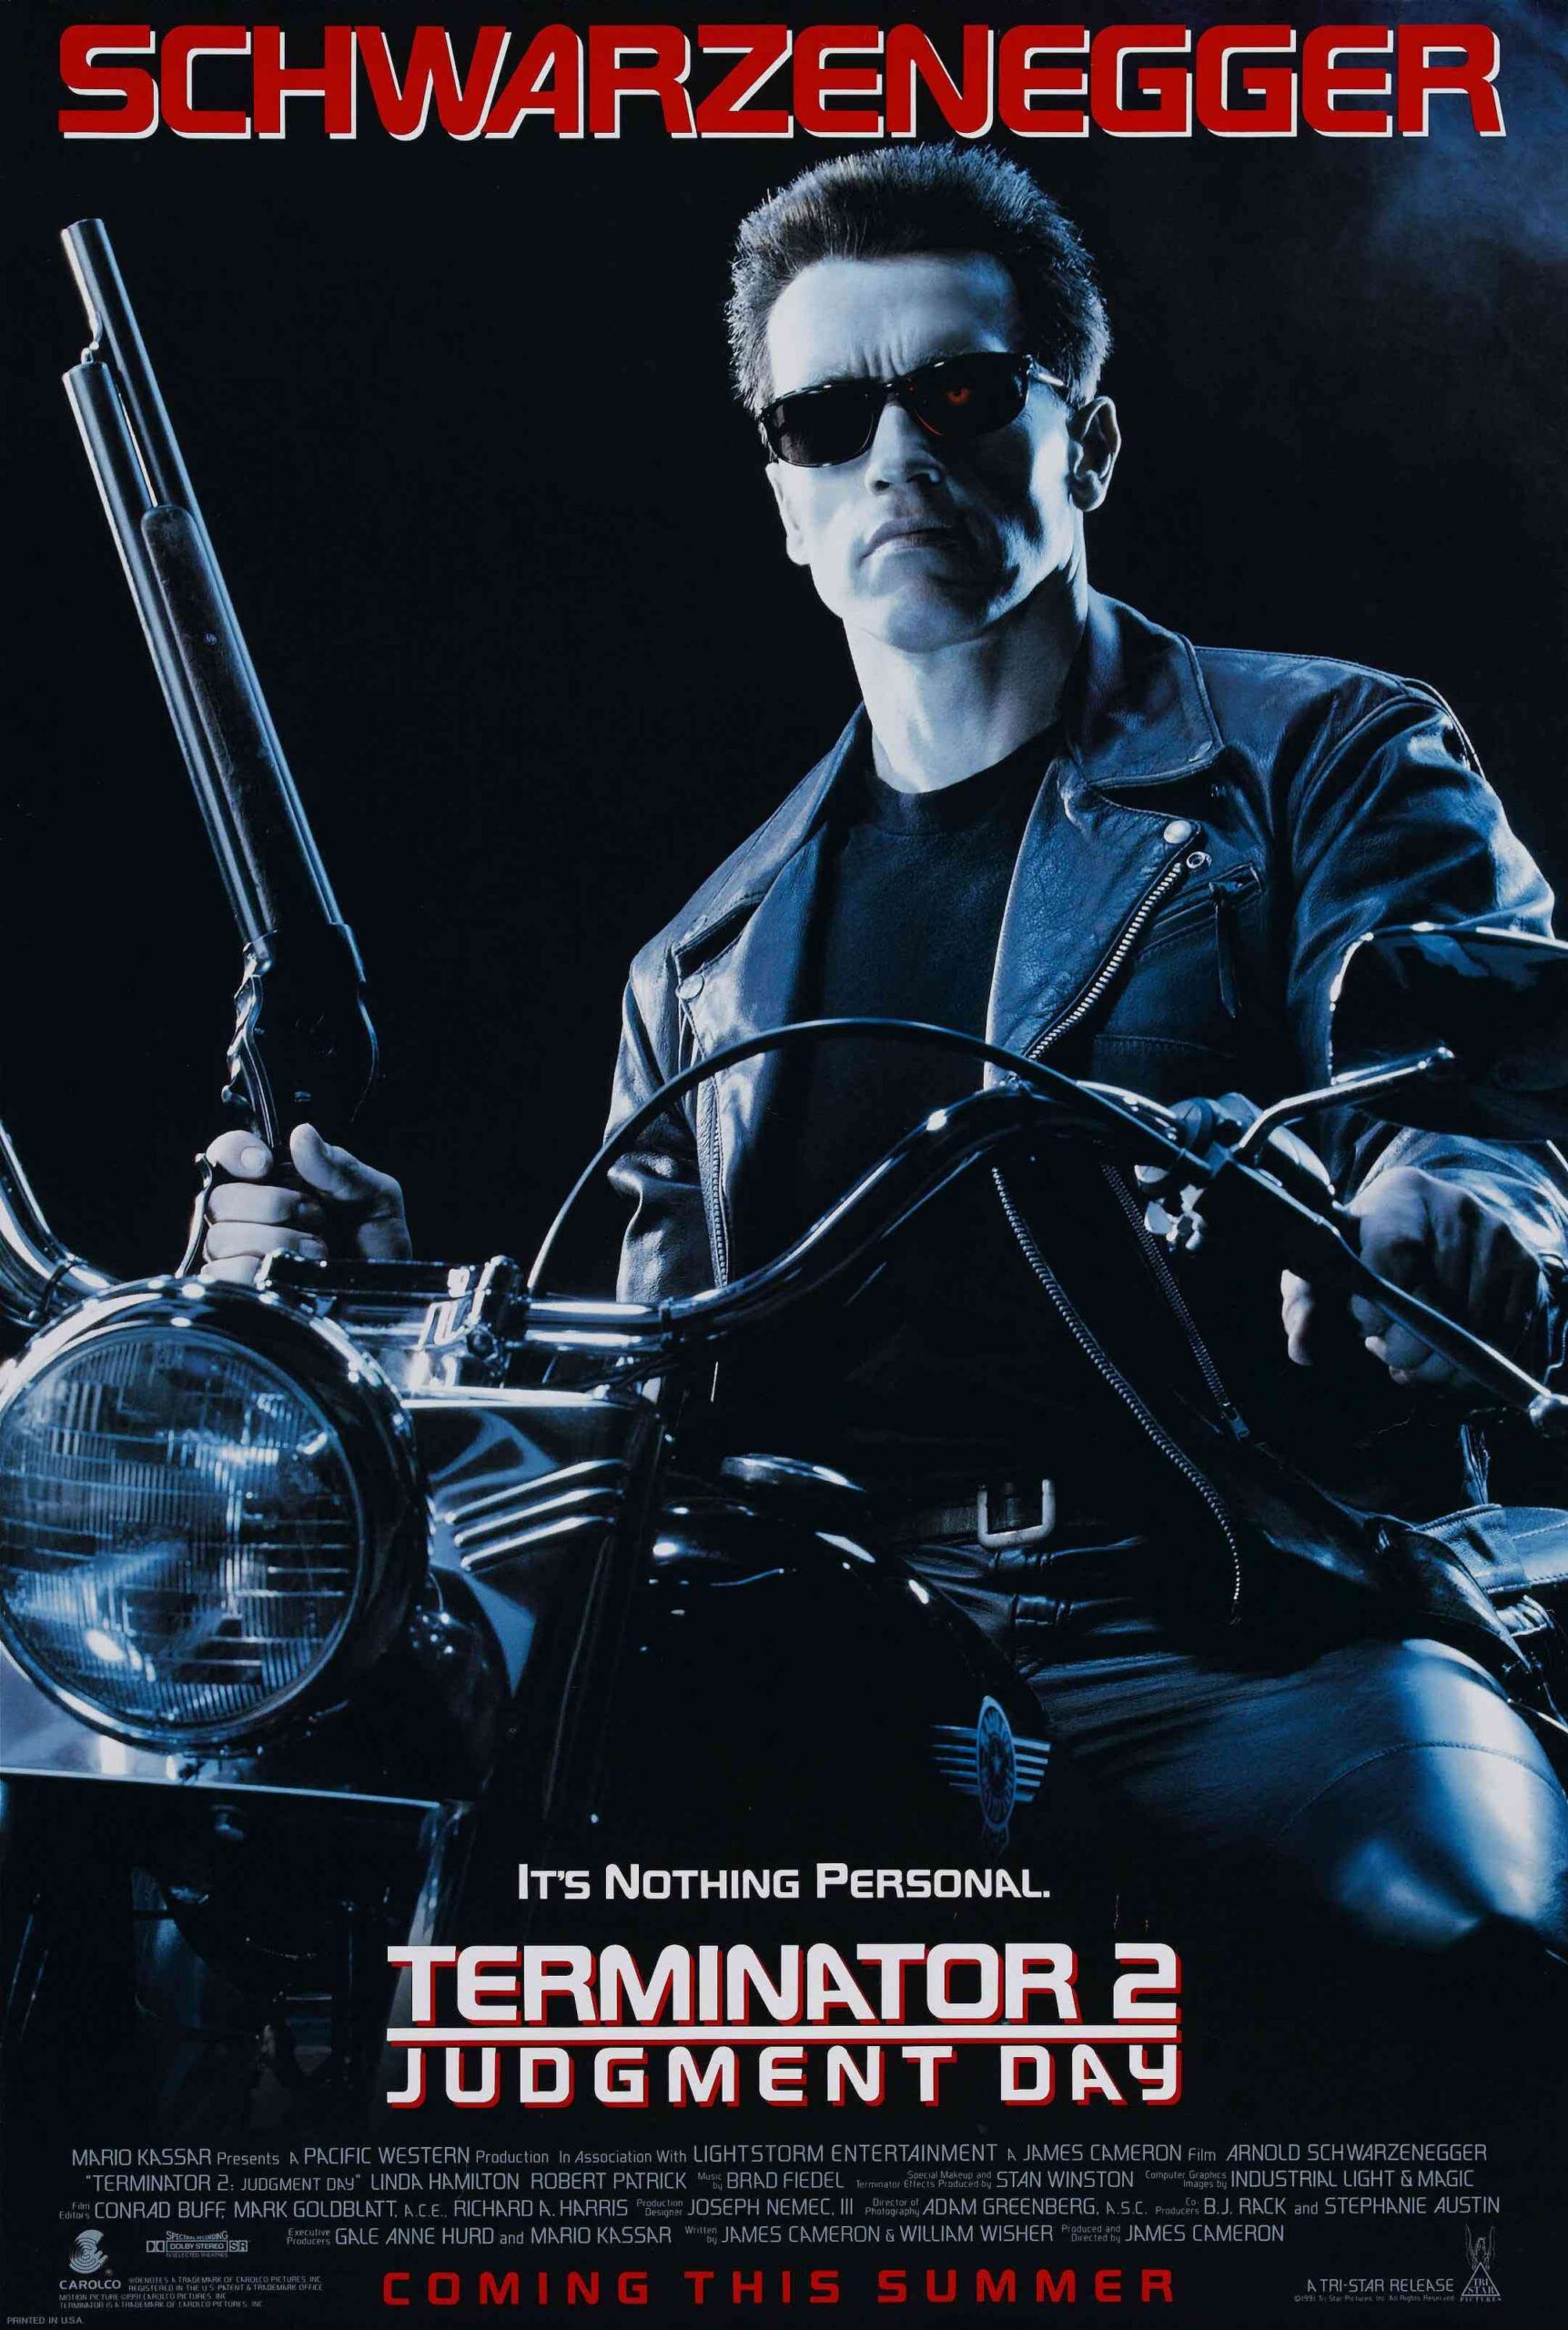 FULL MOVIE: Terminator 2: Judgement Day (1991)